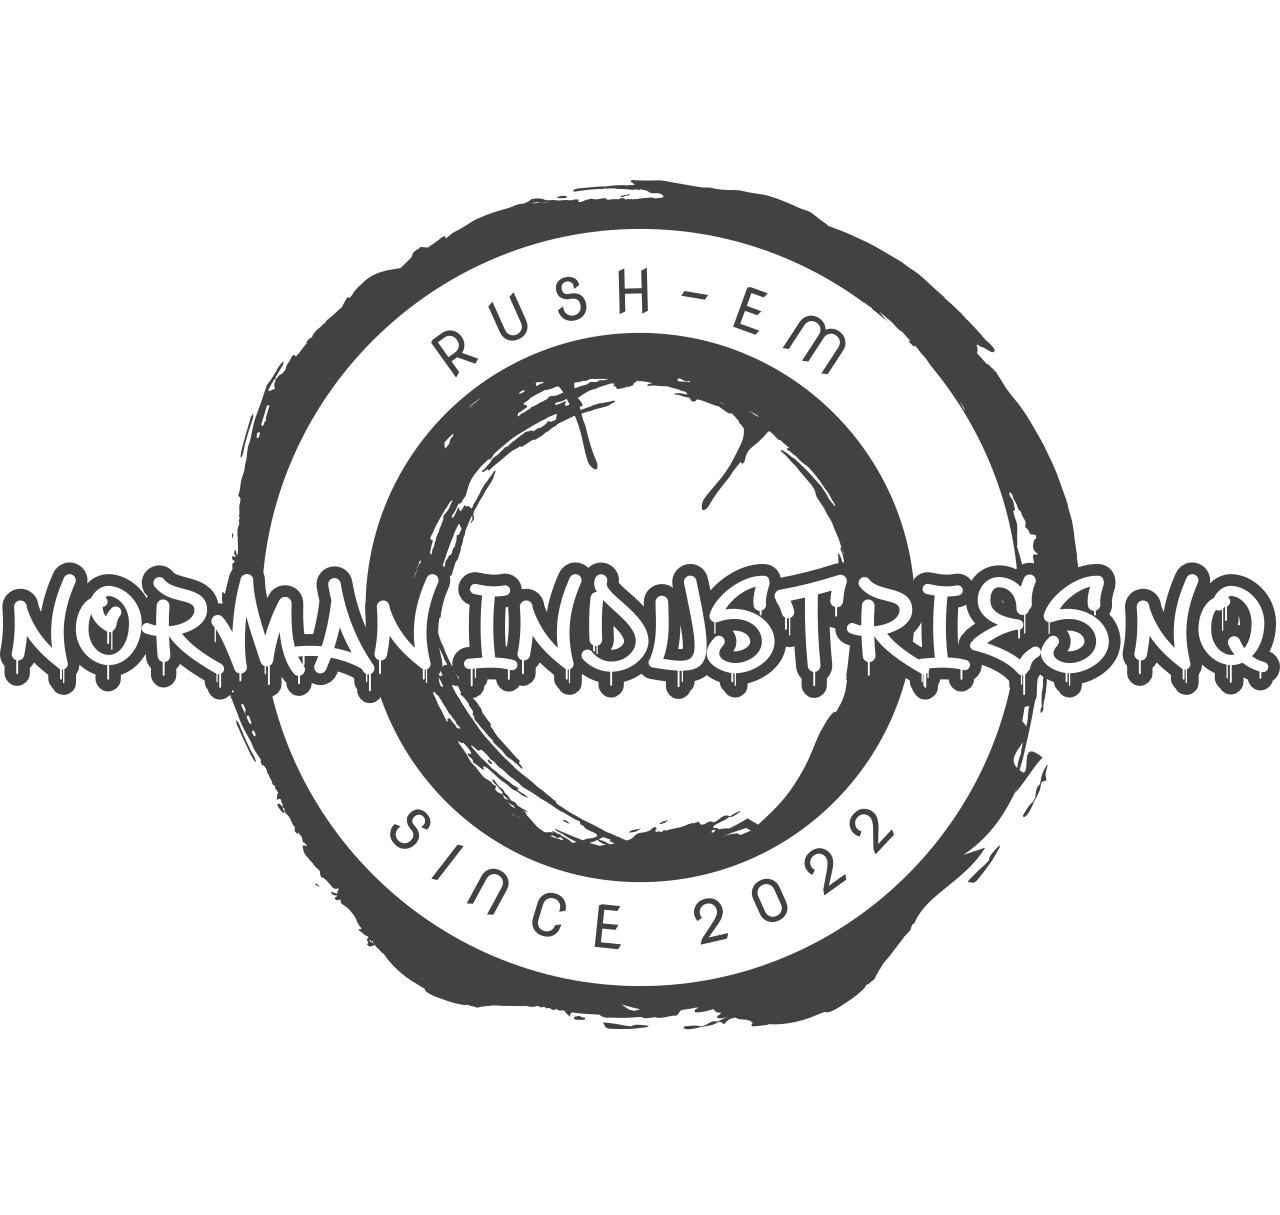 Rush-Em's logo